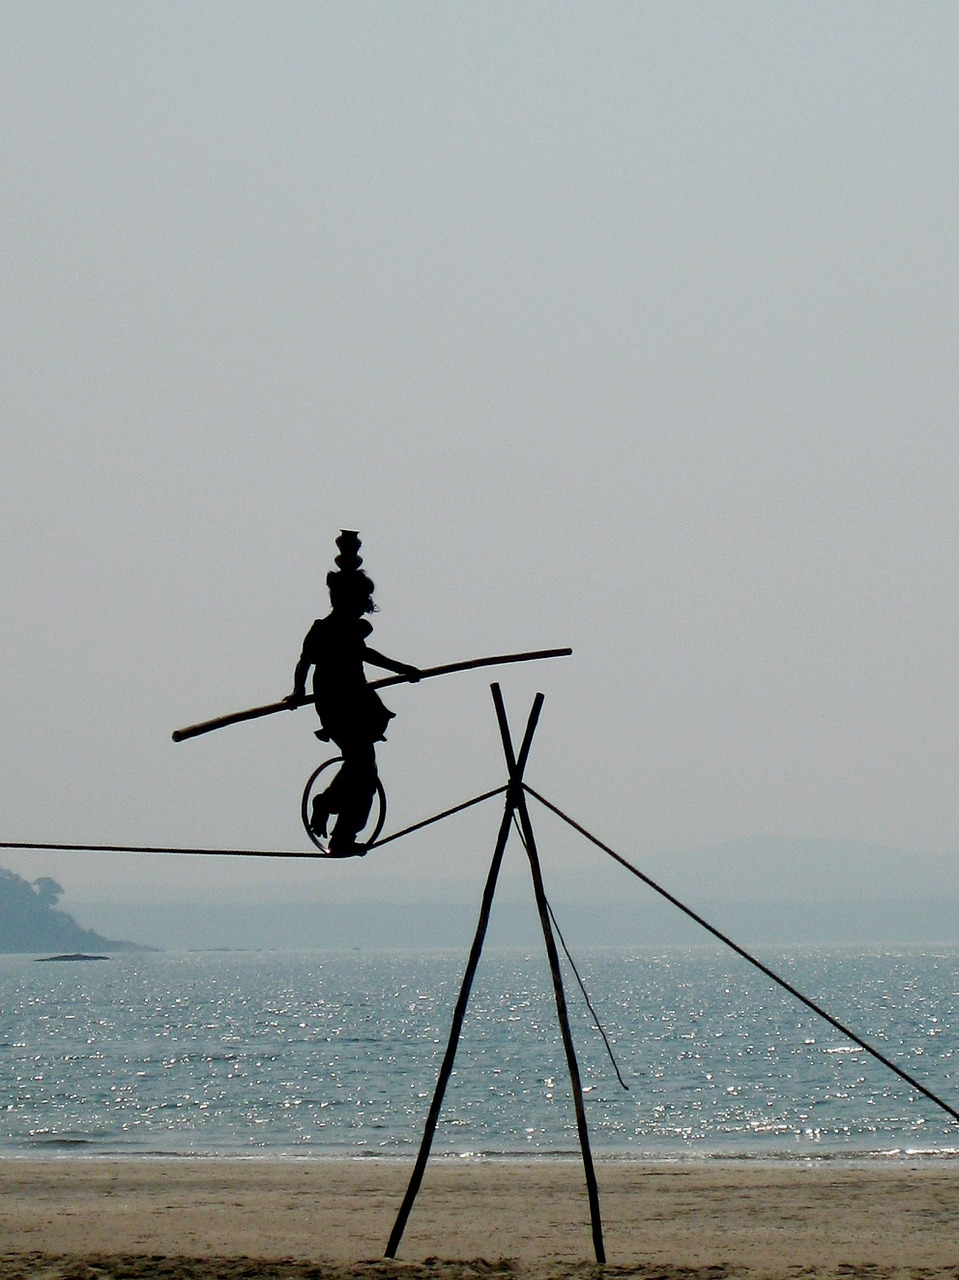 acrobat balance risk free photo